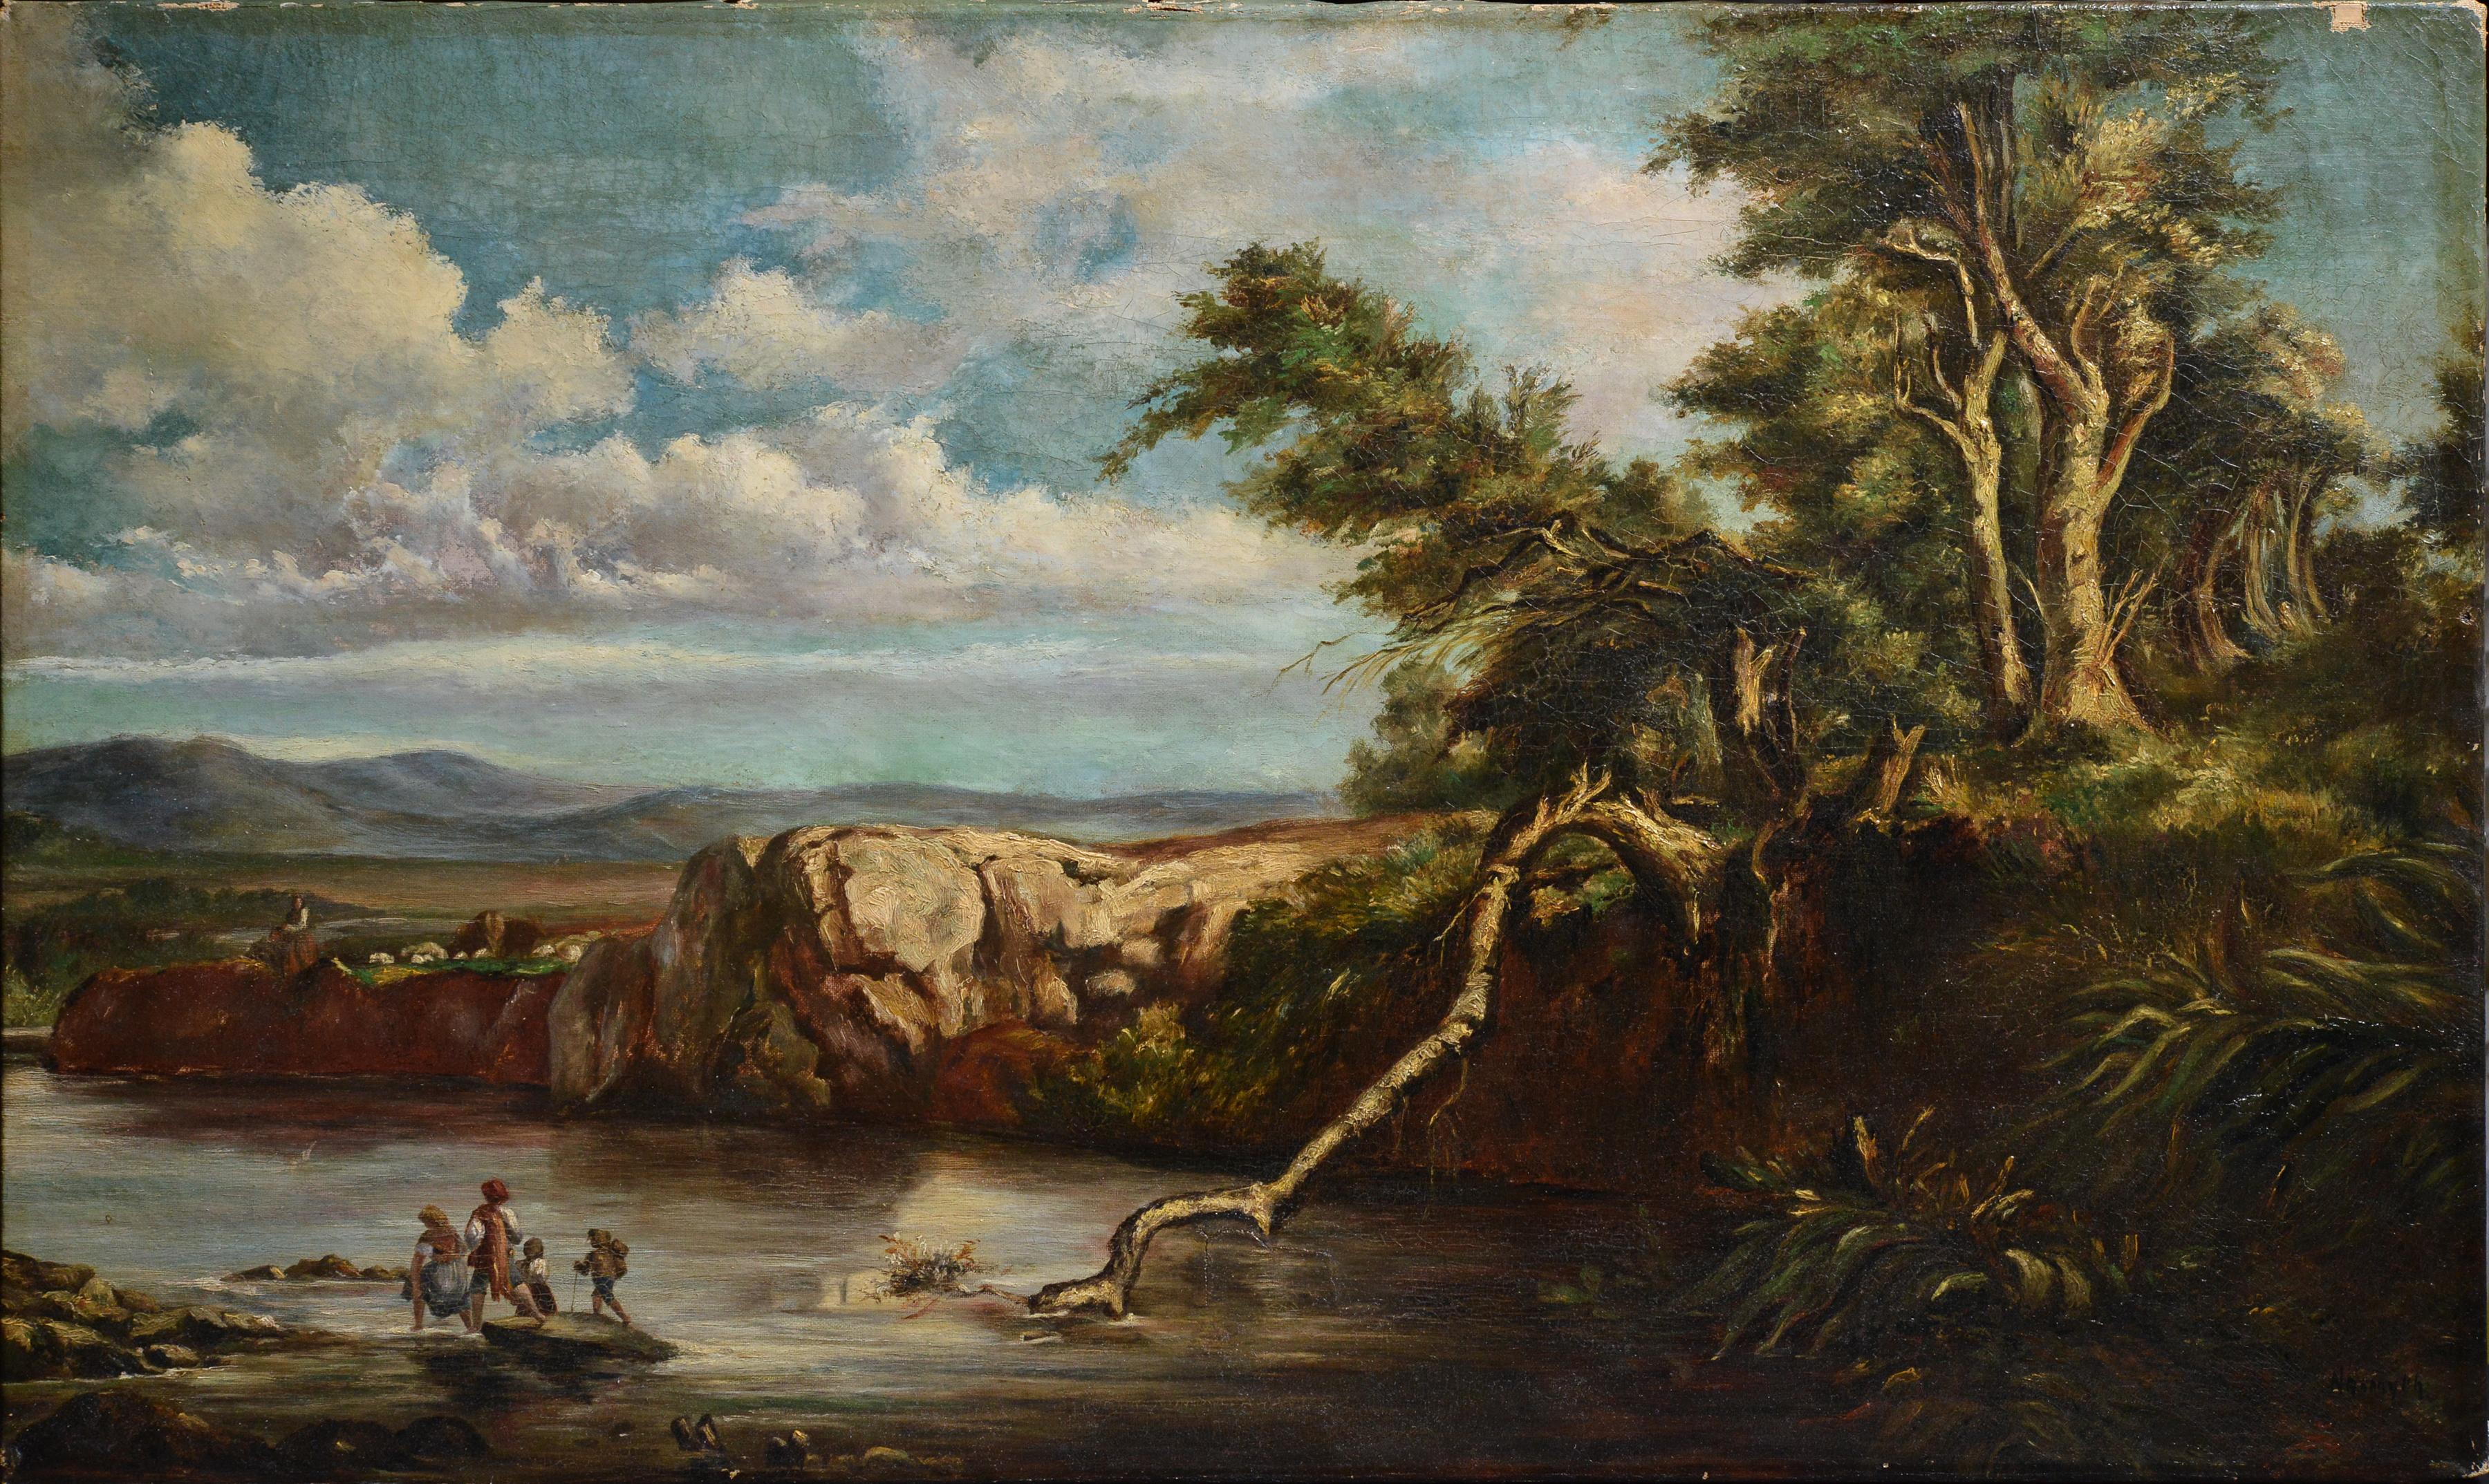 Fording the River Landscape British Master Nasmyth 19th century Oil Painting